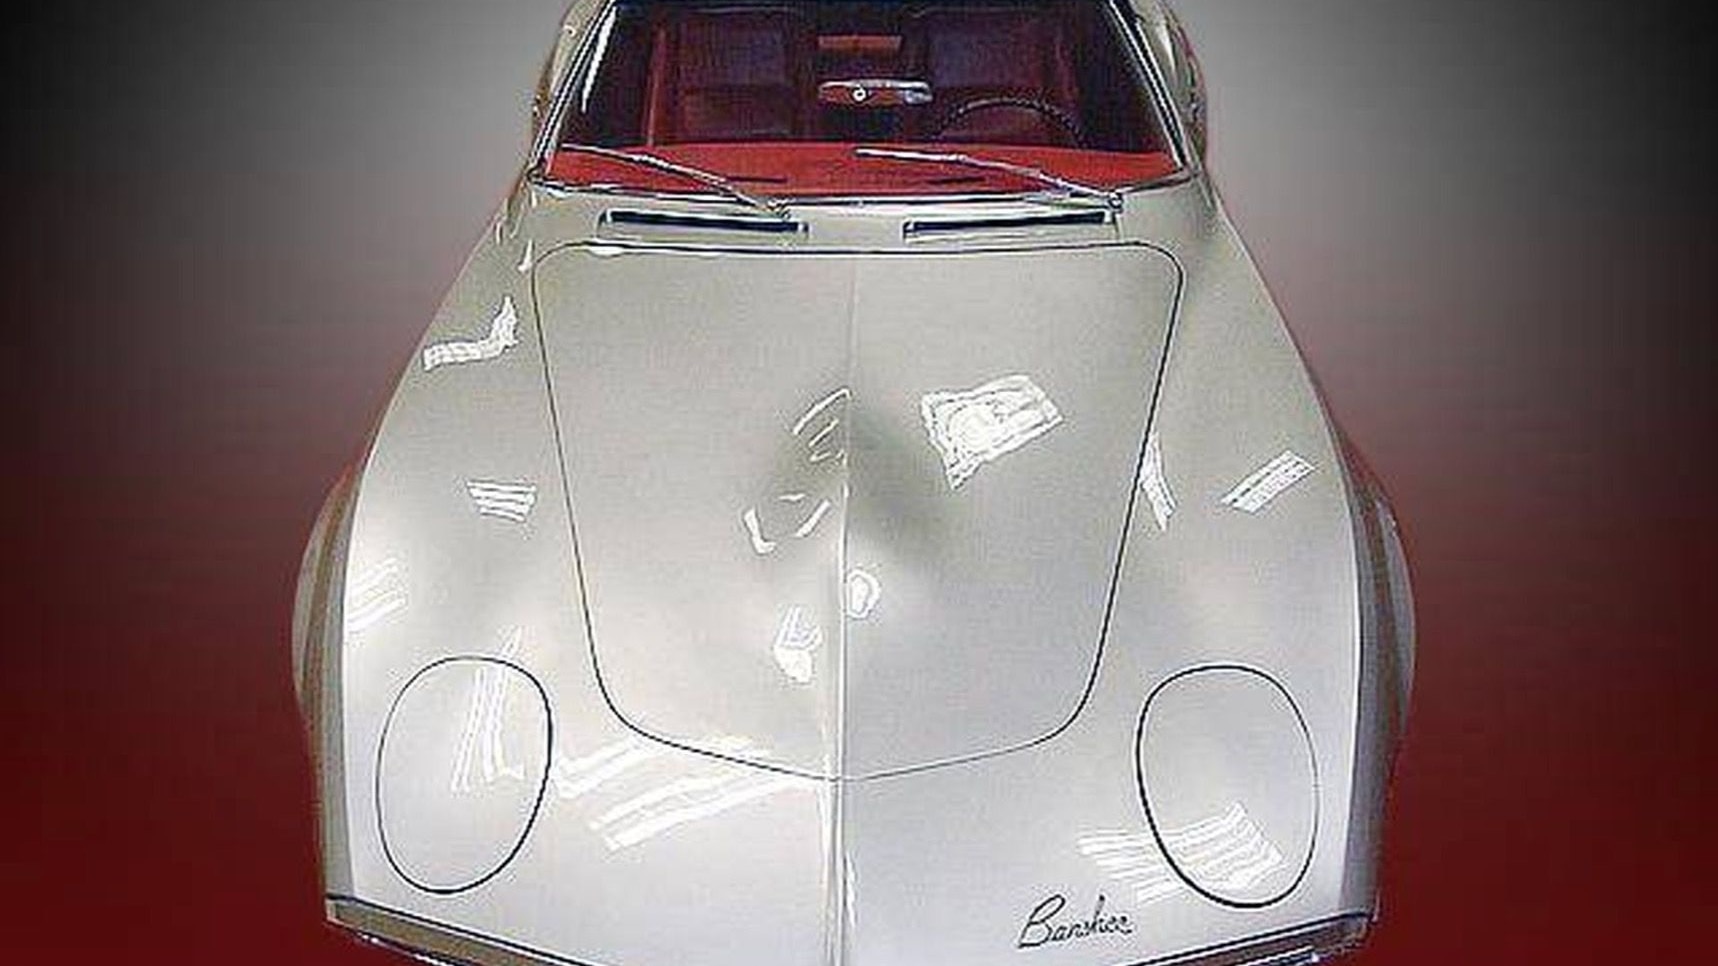 Pontiac Banshee coupe (image via Hemmings)